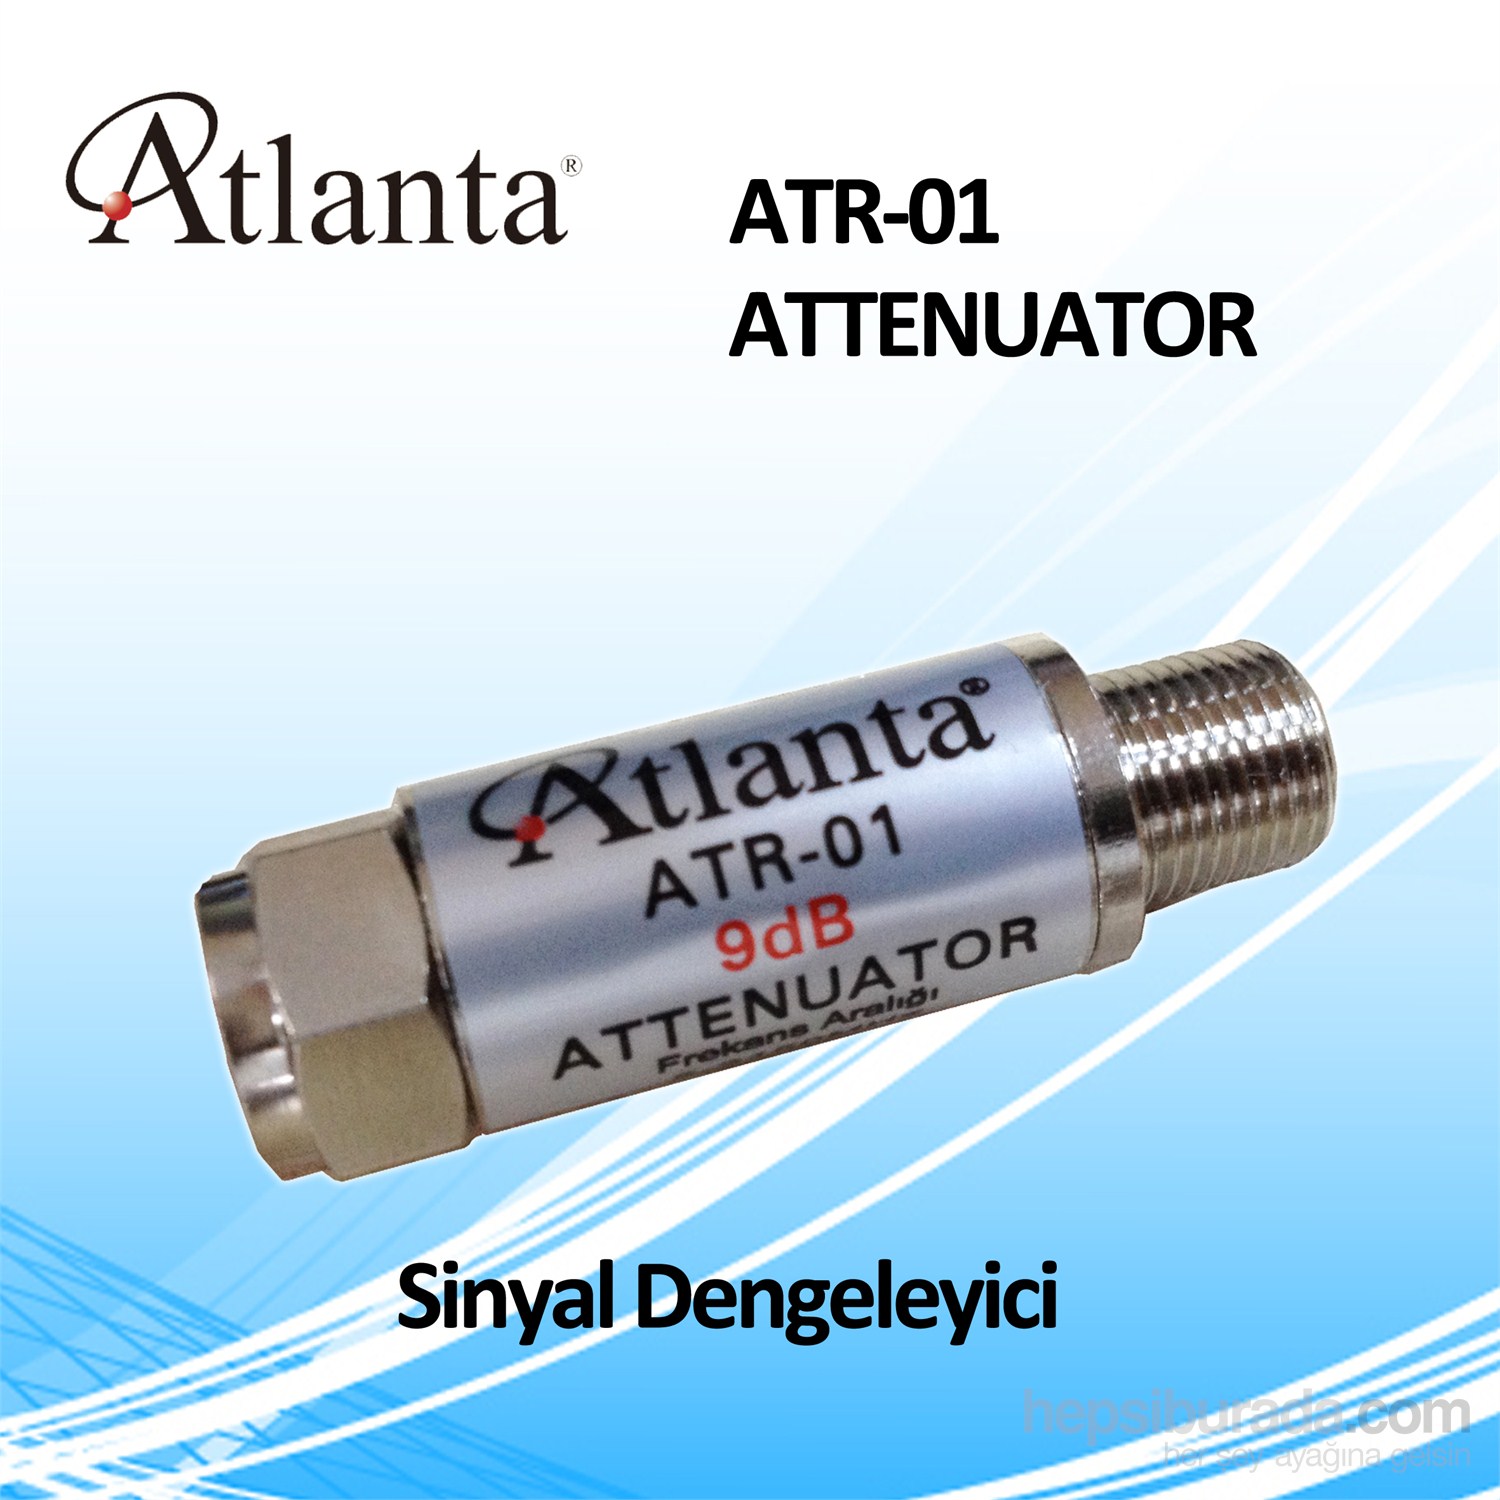 Atlanta ATR-01 ATTENUATOR (Sinyal Dengeleyici)